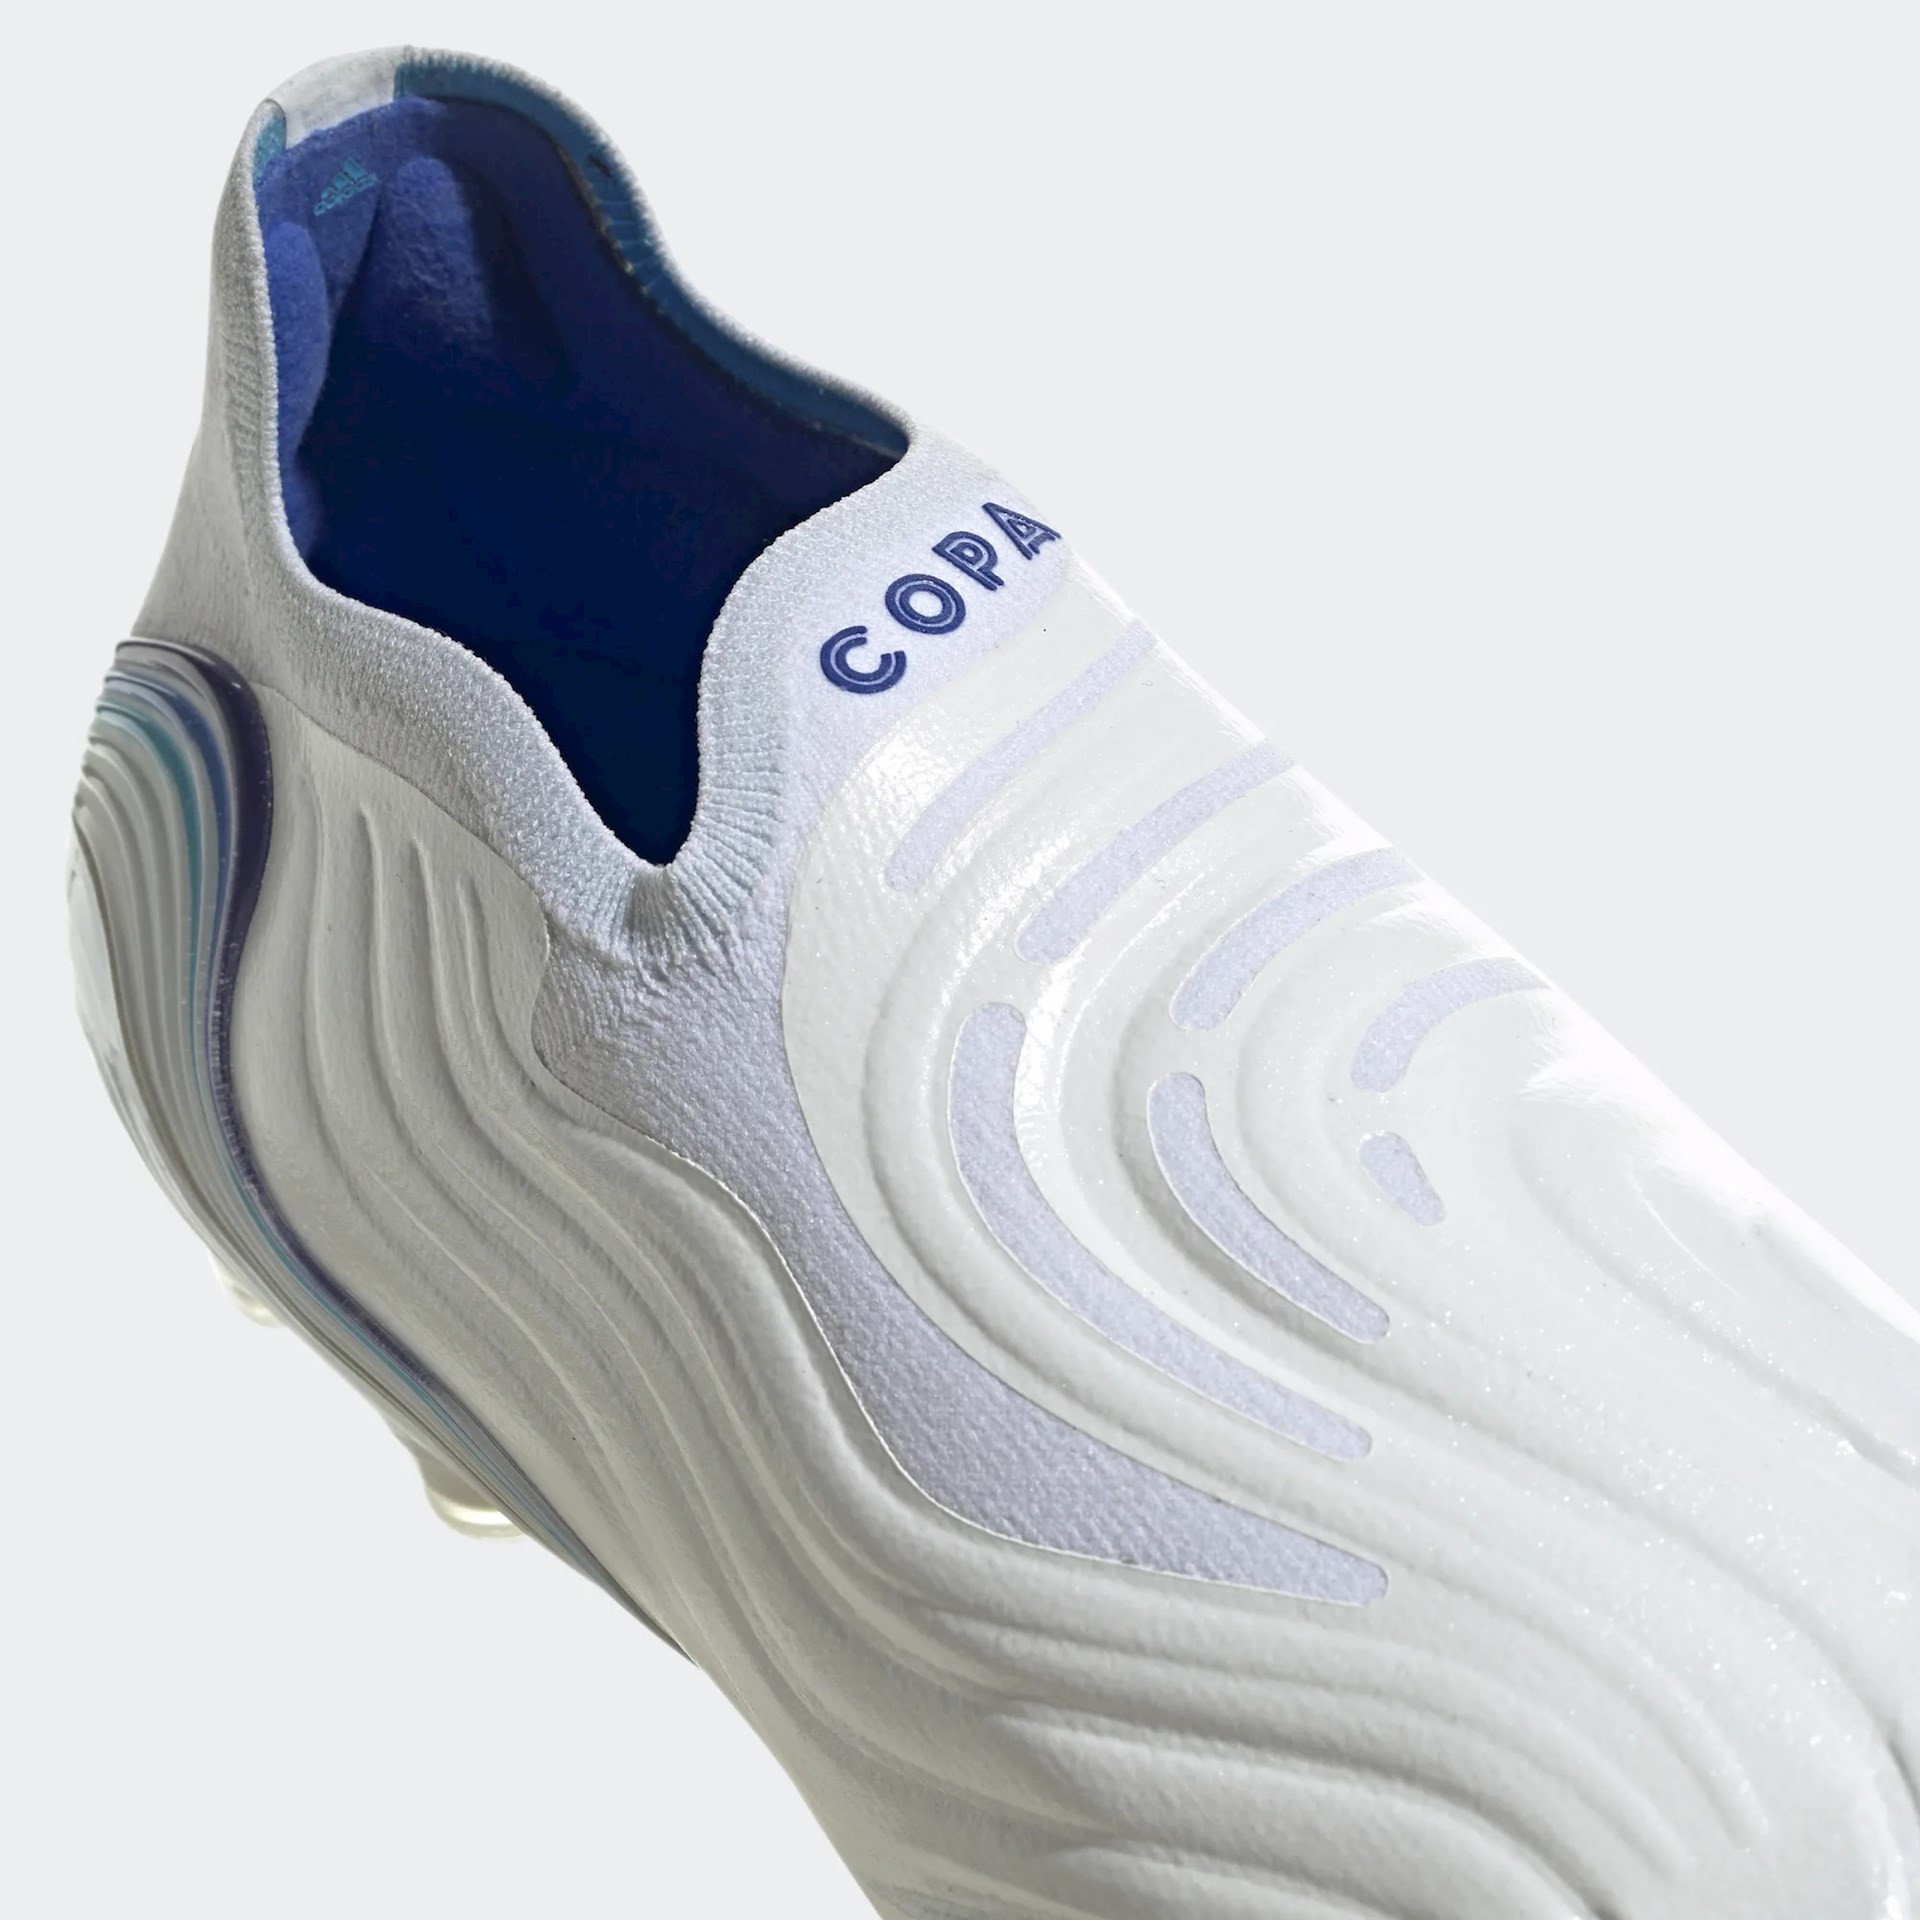 Witte adidas COPA Sense voetbalschoenen